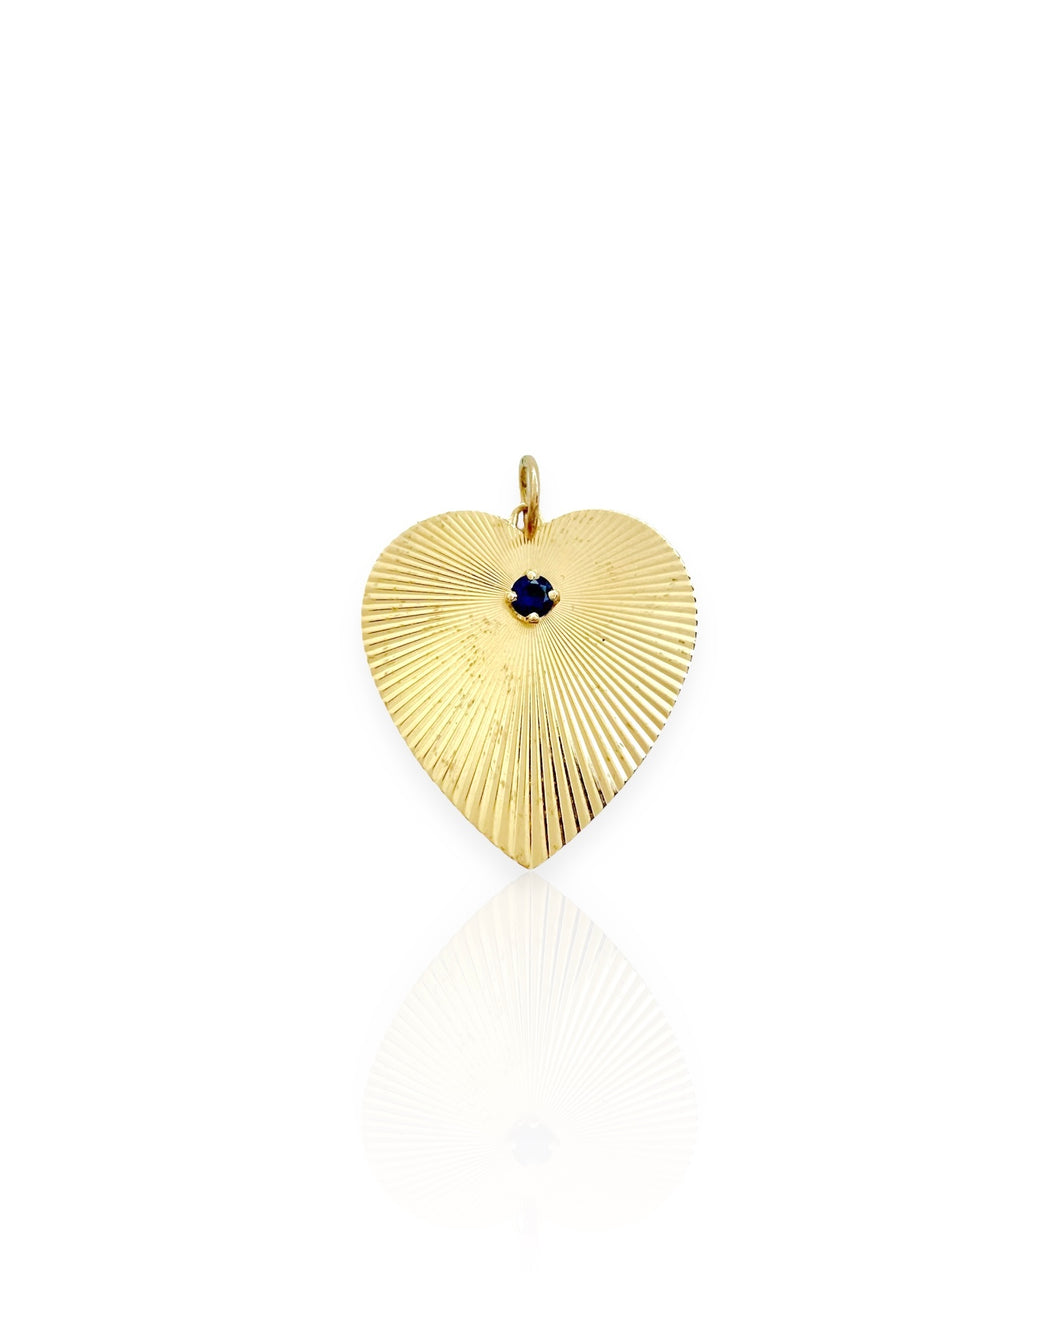 14k Gold Tiffany Engine Turned Heart Charm